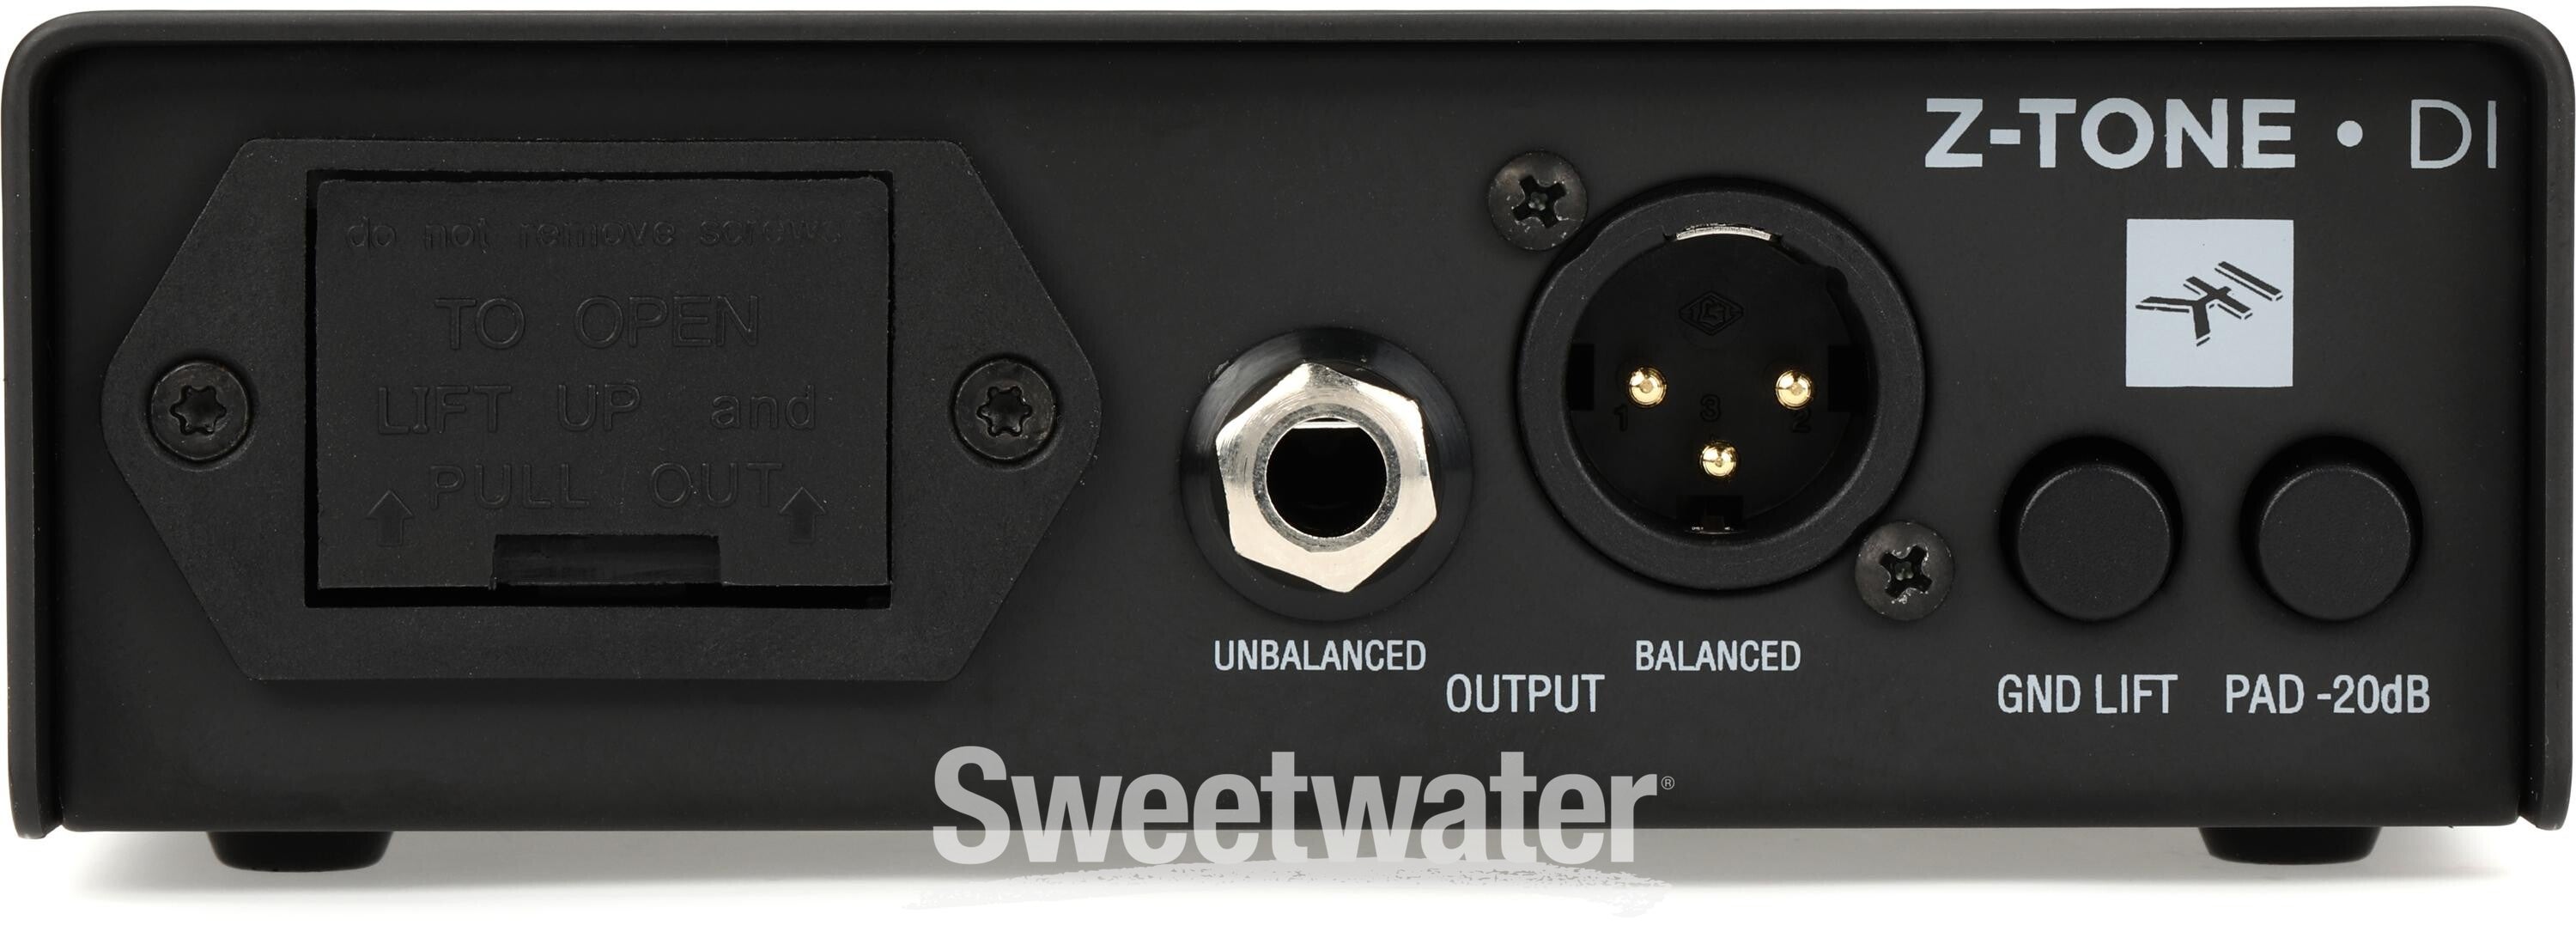 IK Multimedia Z-Tone Active Direct Box | Sweetwater